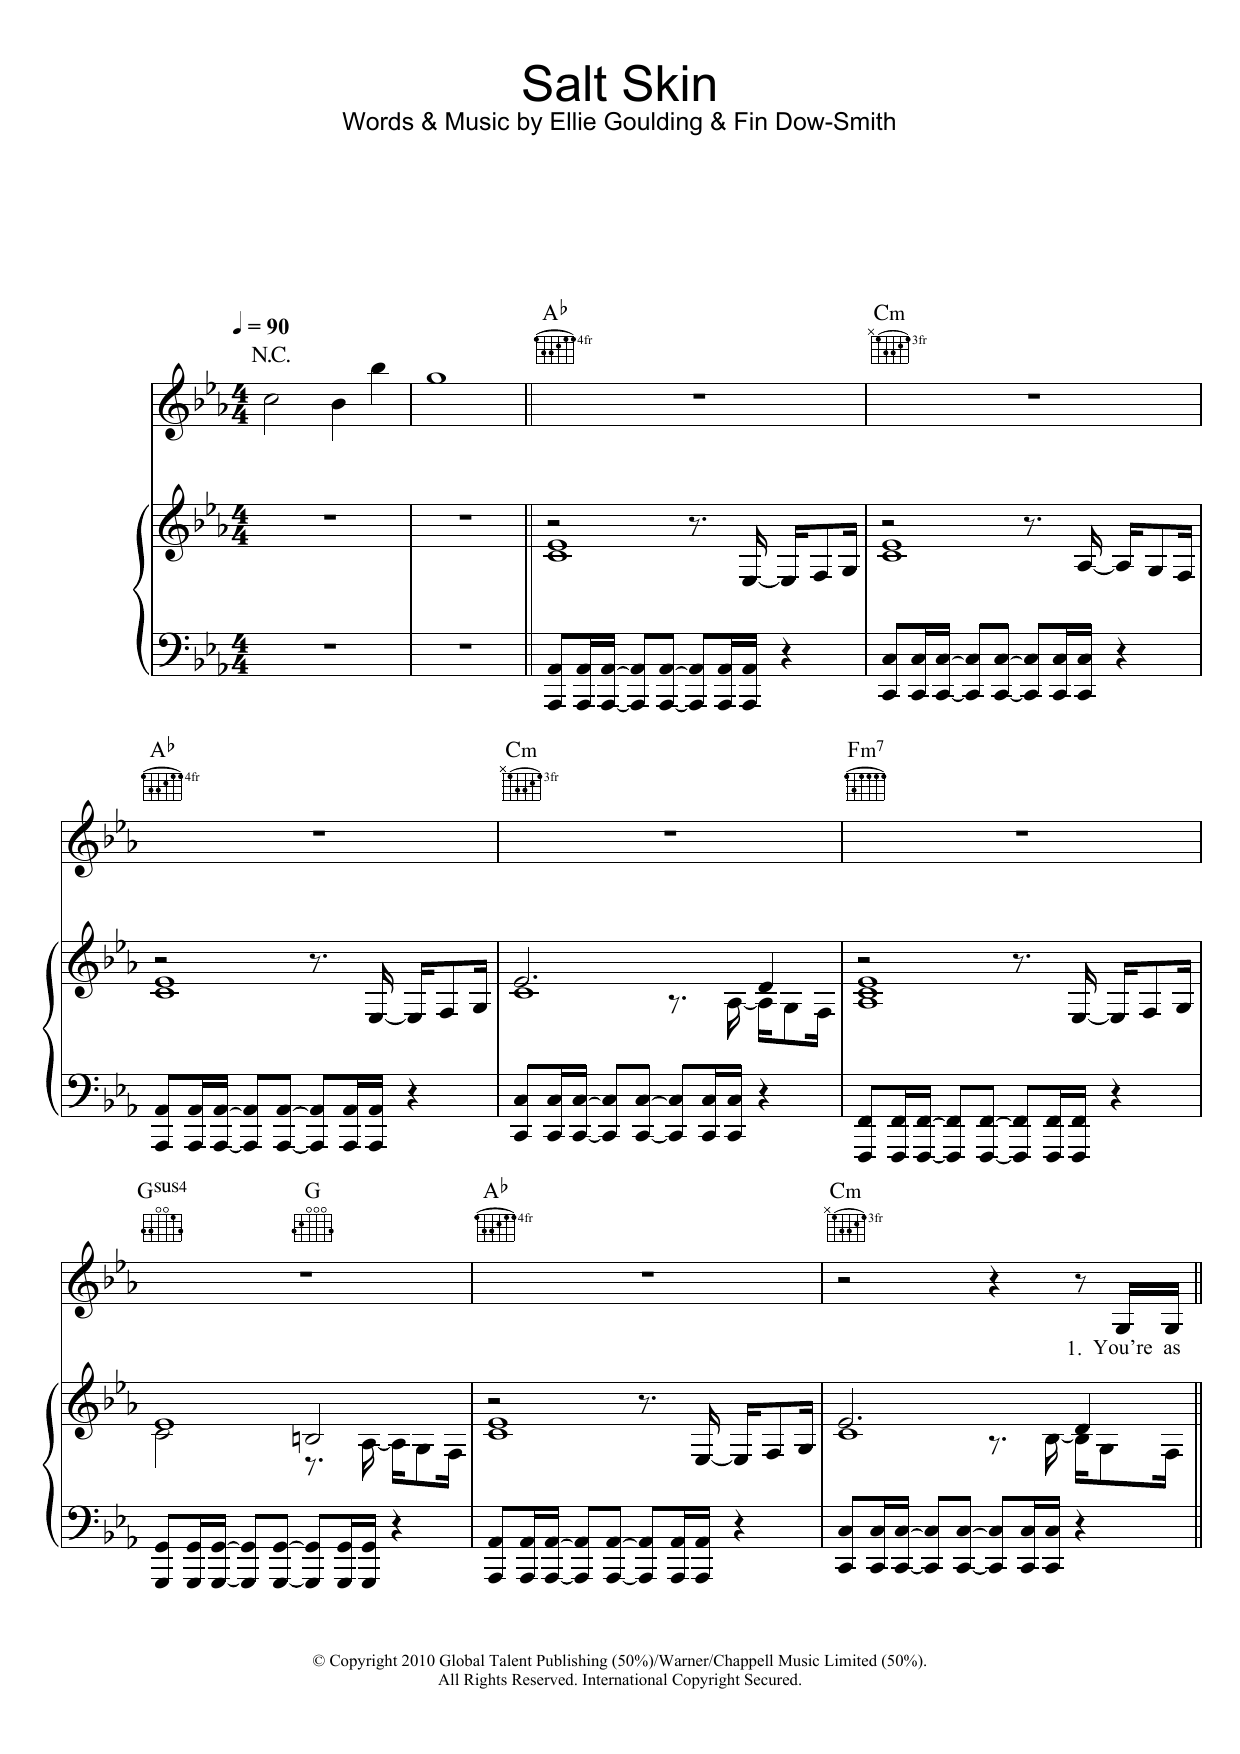 Ellie Goulding Salt Skin Sheet Music Notes & Chords for Piano, Vocal & Guitar - Download or Print PDF